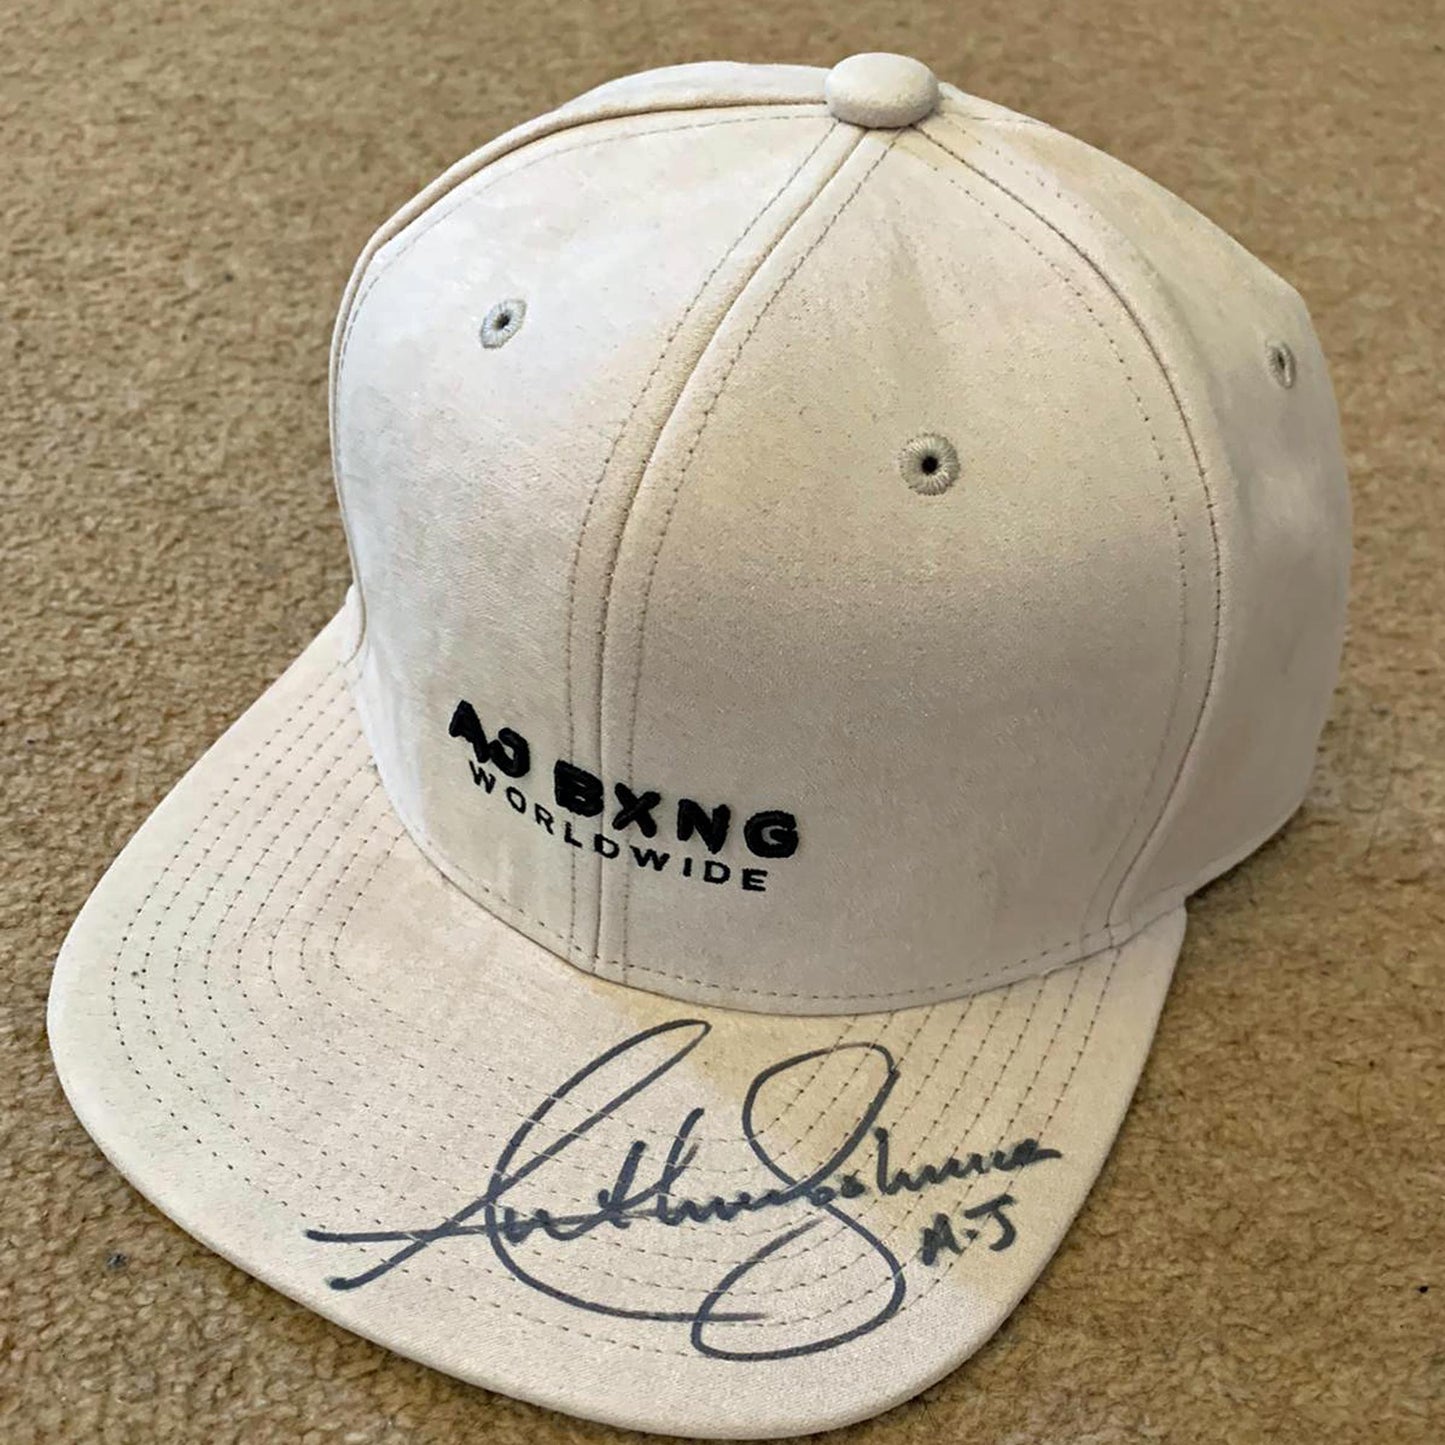 Signed Joshua Collectable Memorabilia Signed Hat